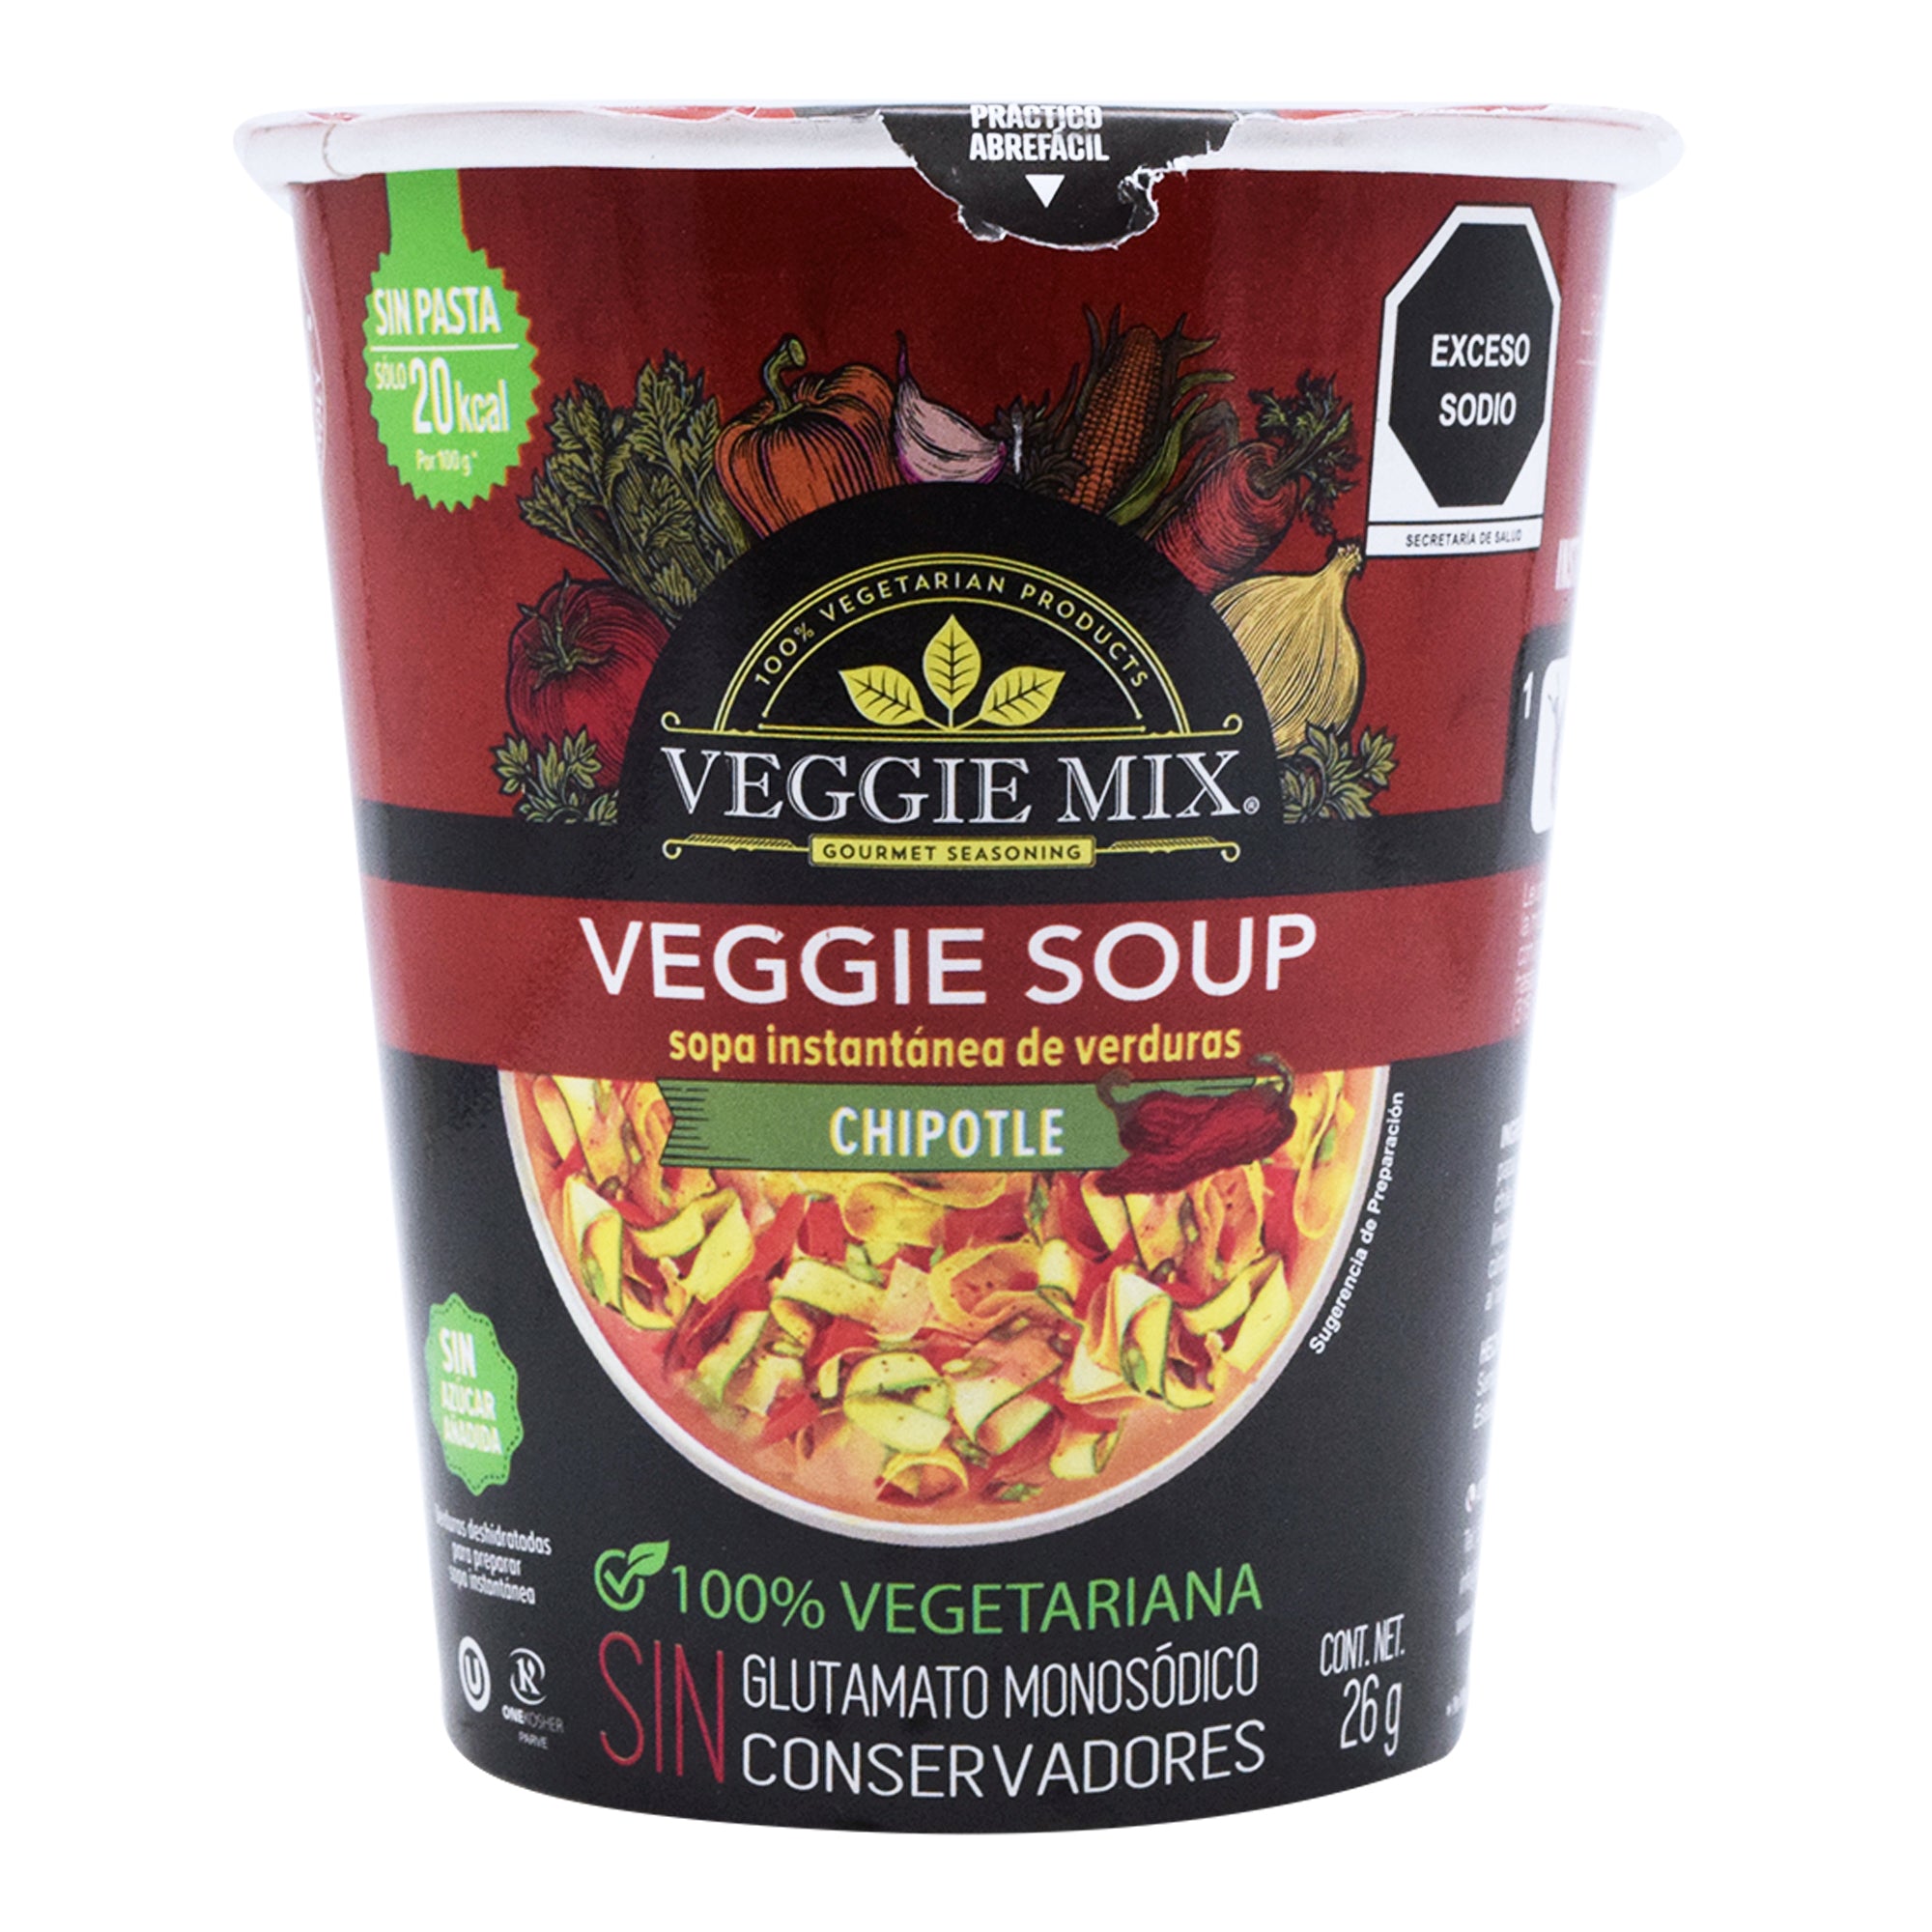 Sopa de verduras instantanea sab chipotle 26 g